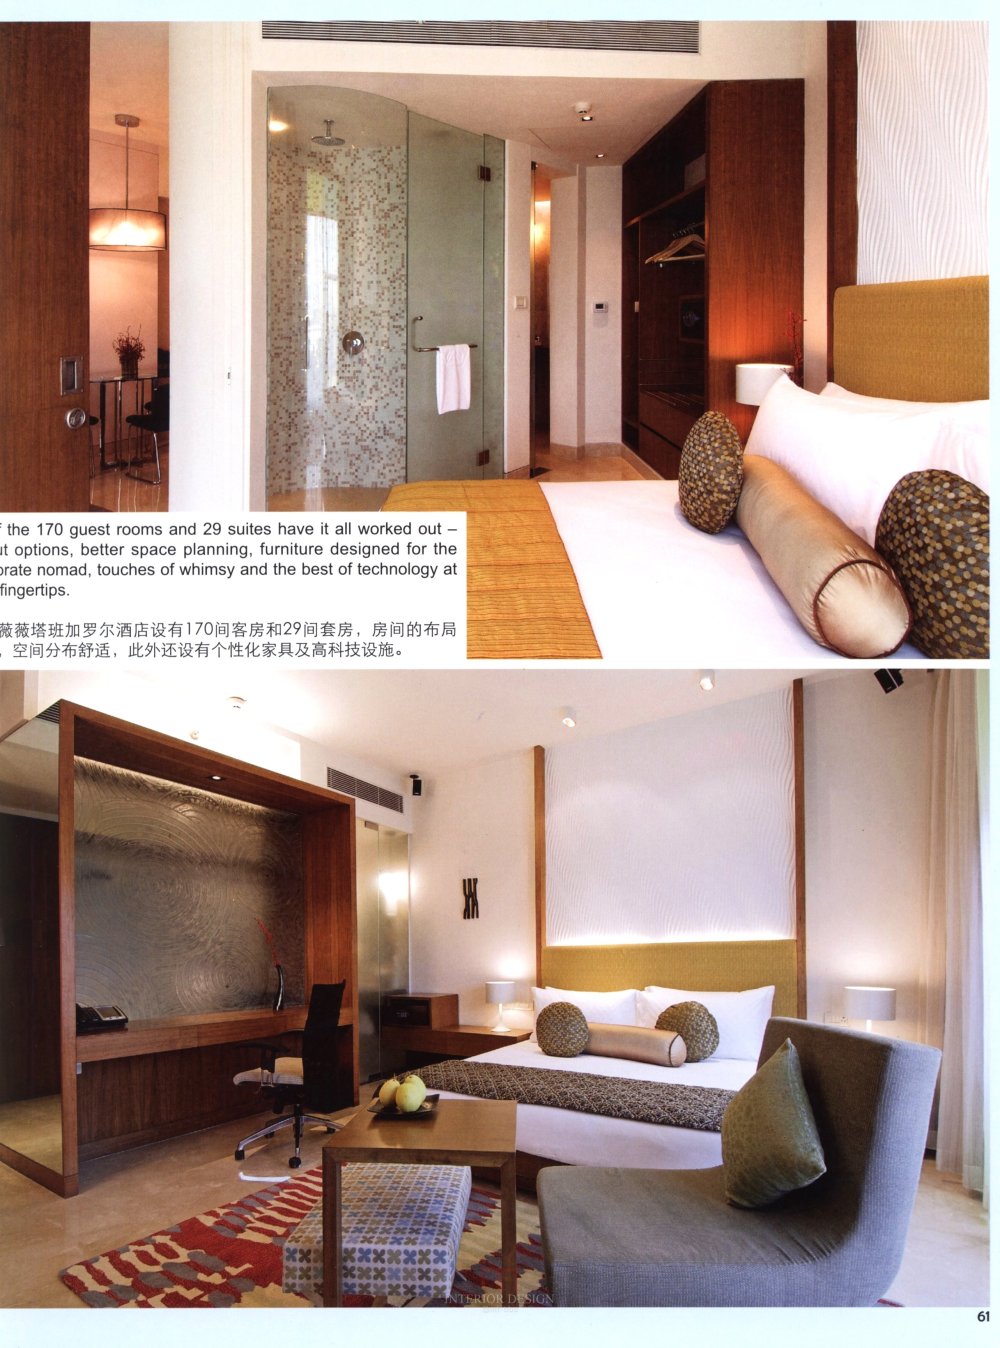 101全球酒店客房 101HOTELS GUEST ROOMS_图站_AiJpgg_com_056.jpg